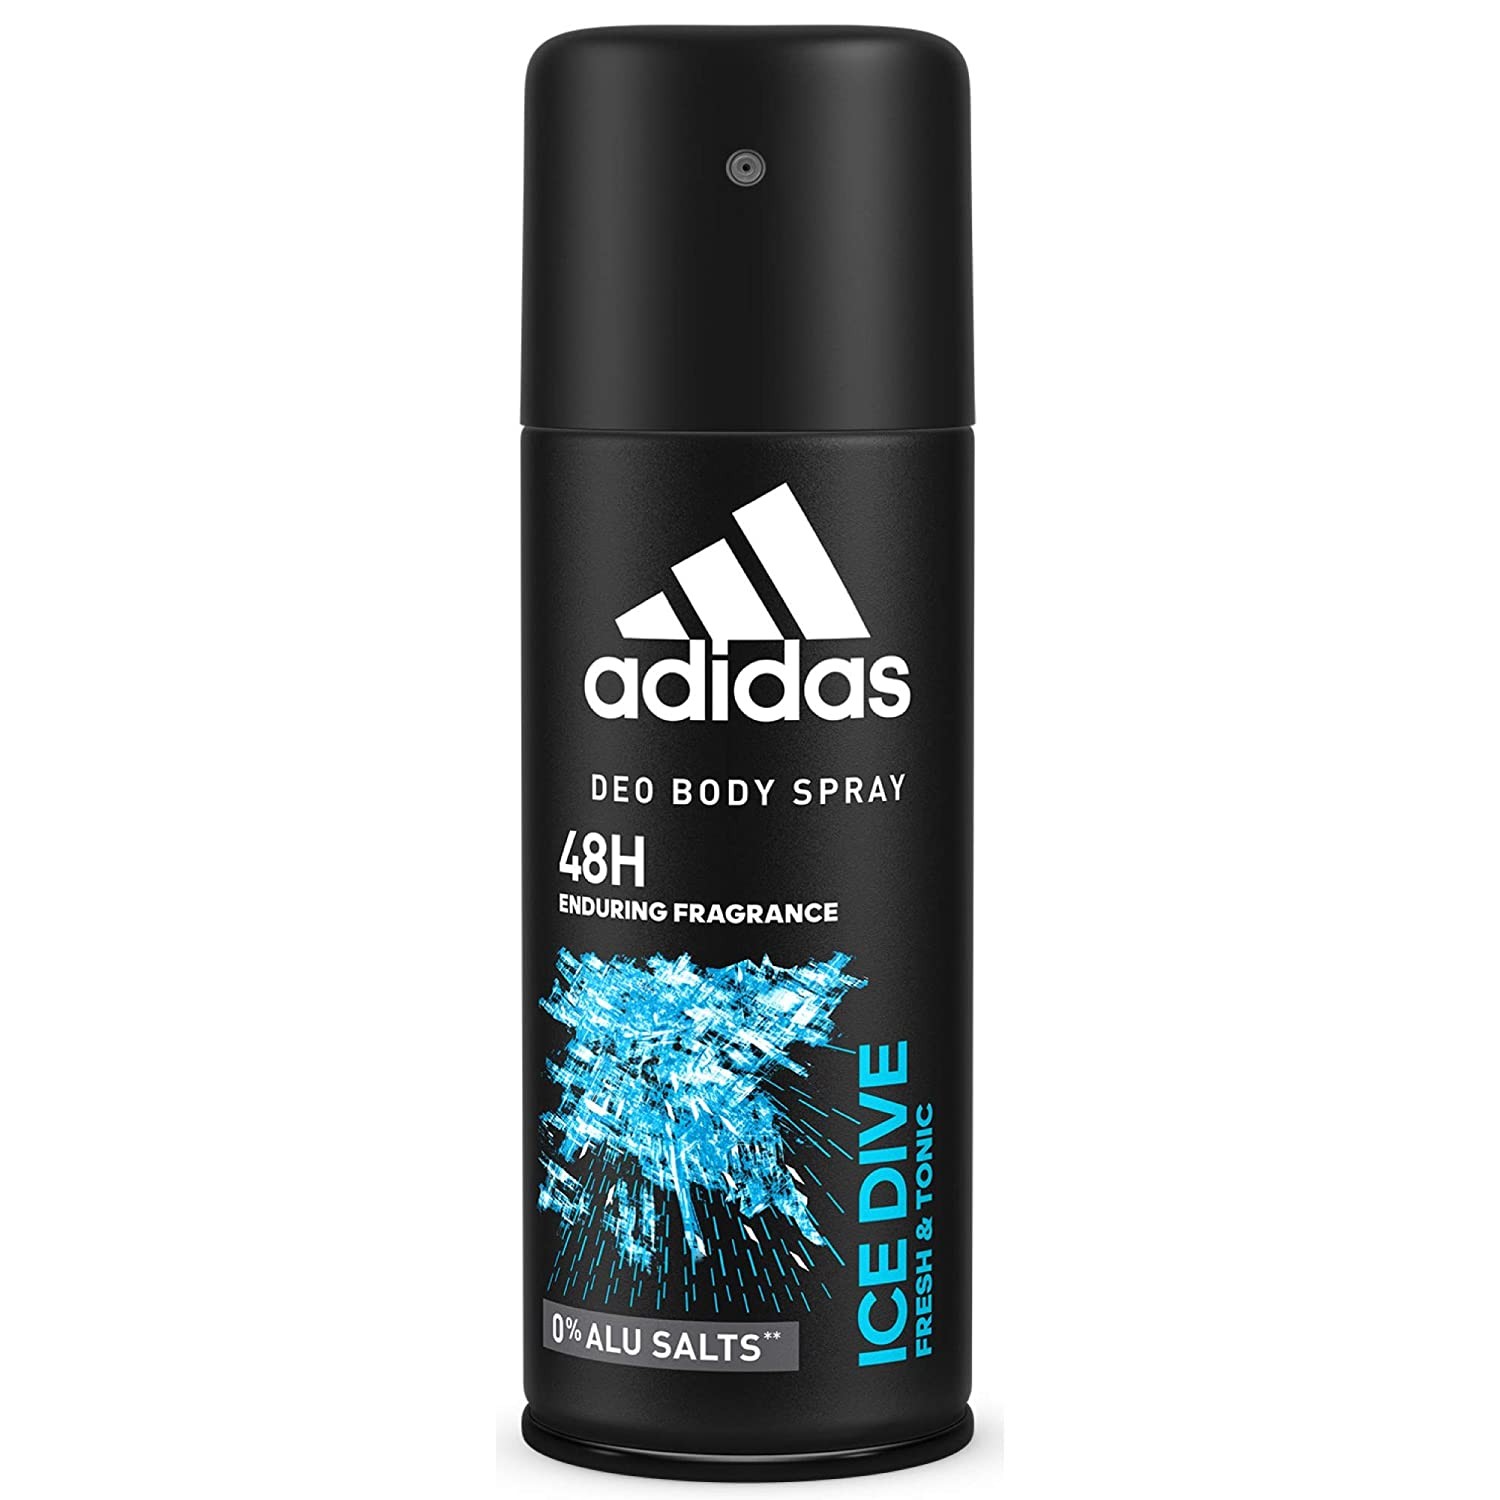 Adidas Deo Body Spray